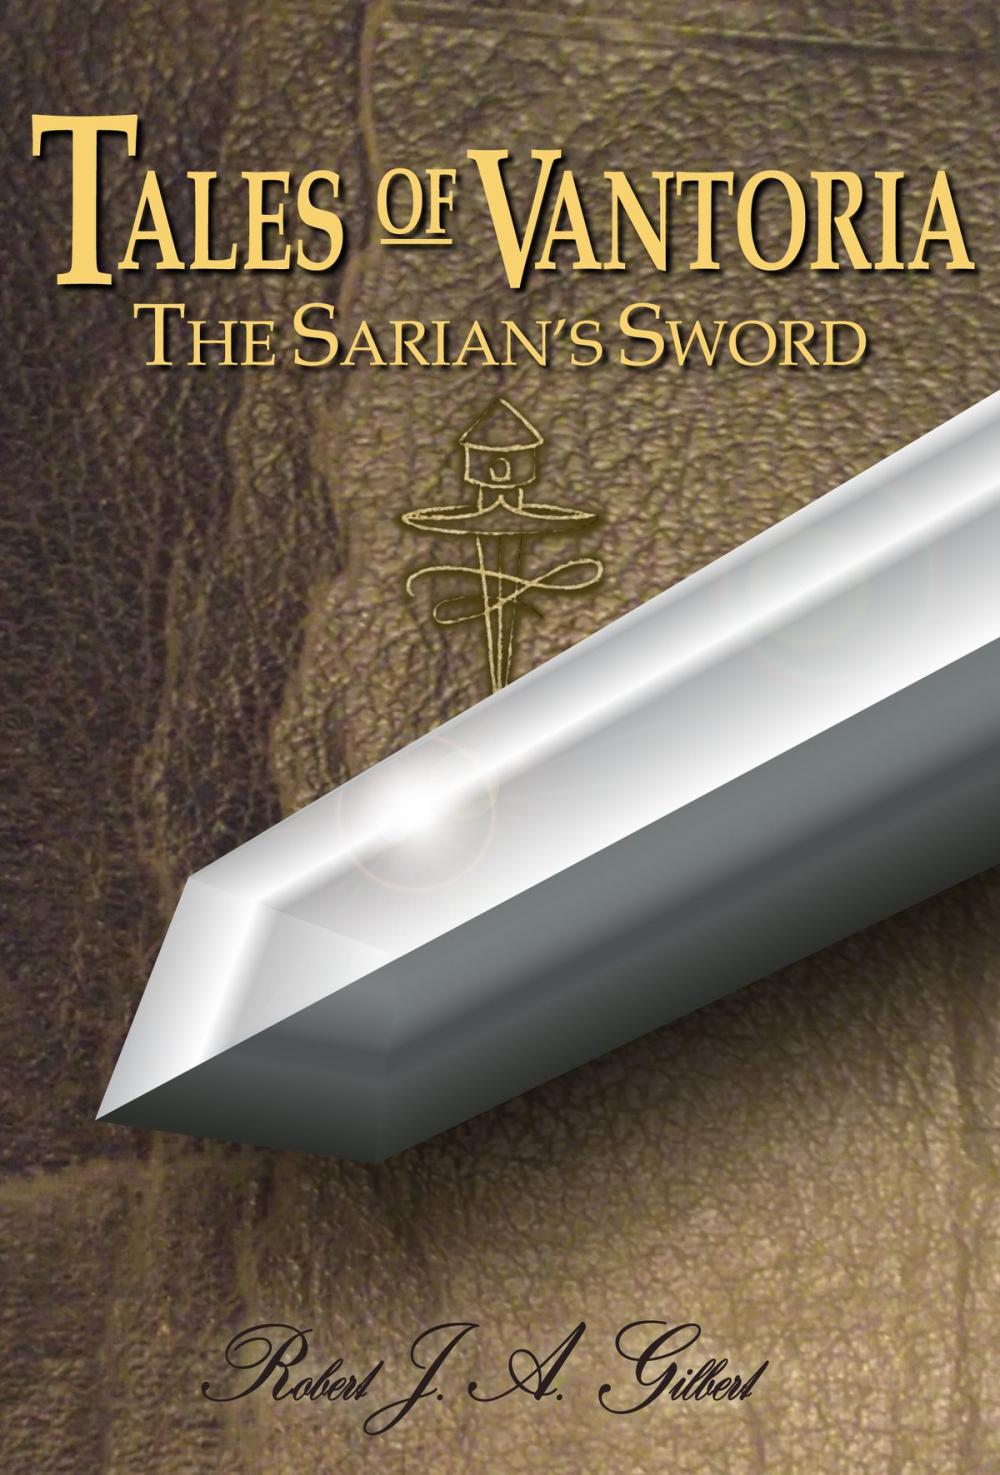 Big bigCover of The Sarian's Sword (Tales of Vantoria book 1)